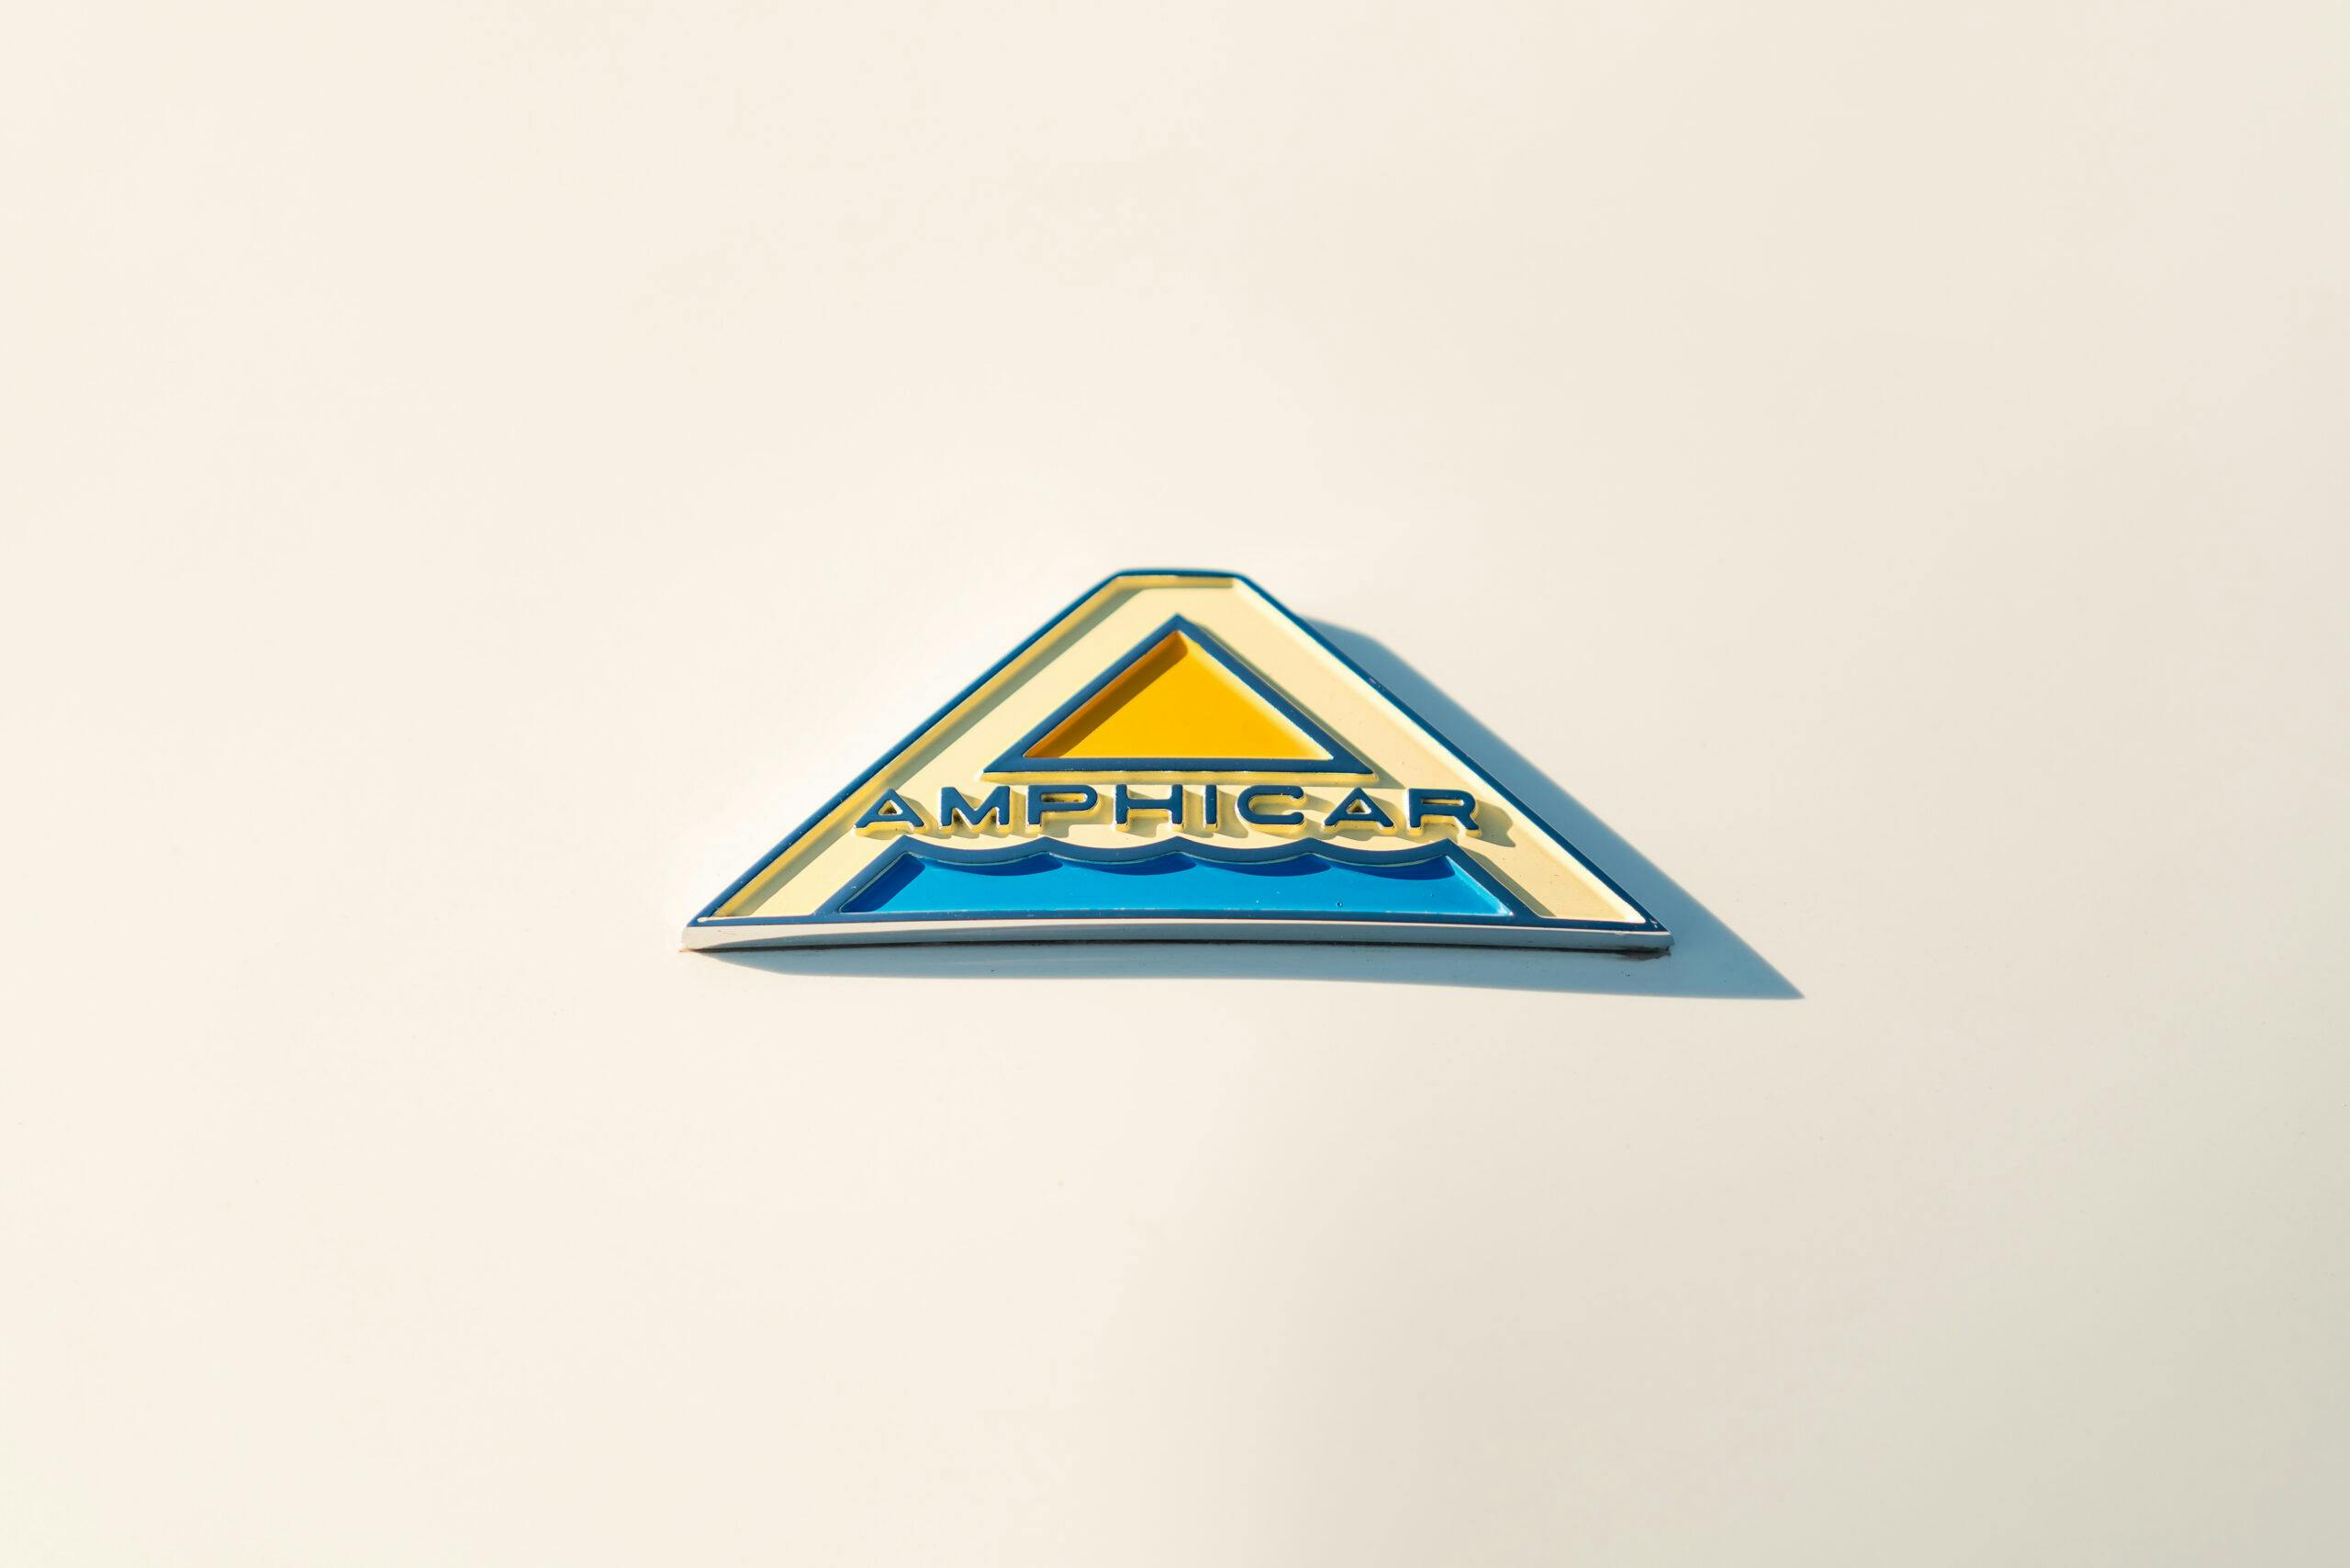 1961 Amphicar 770 badge